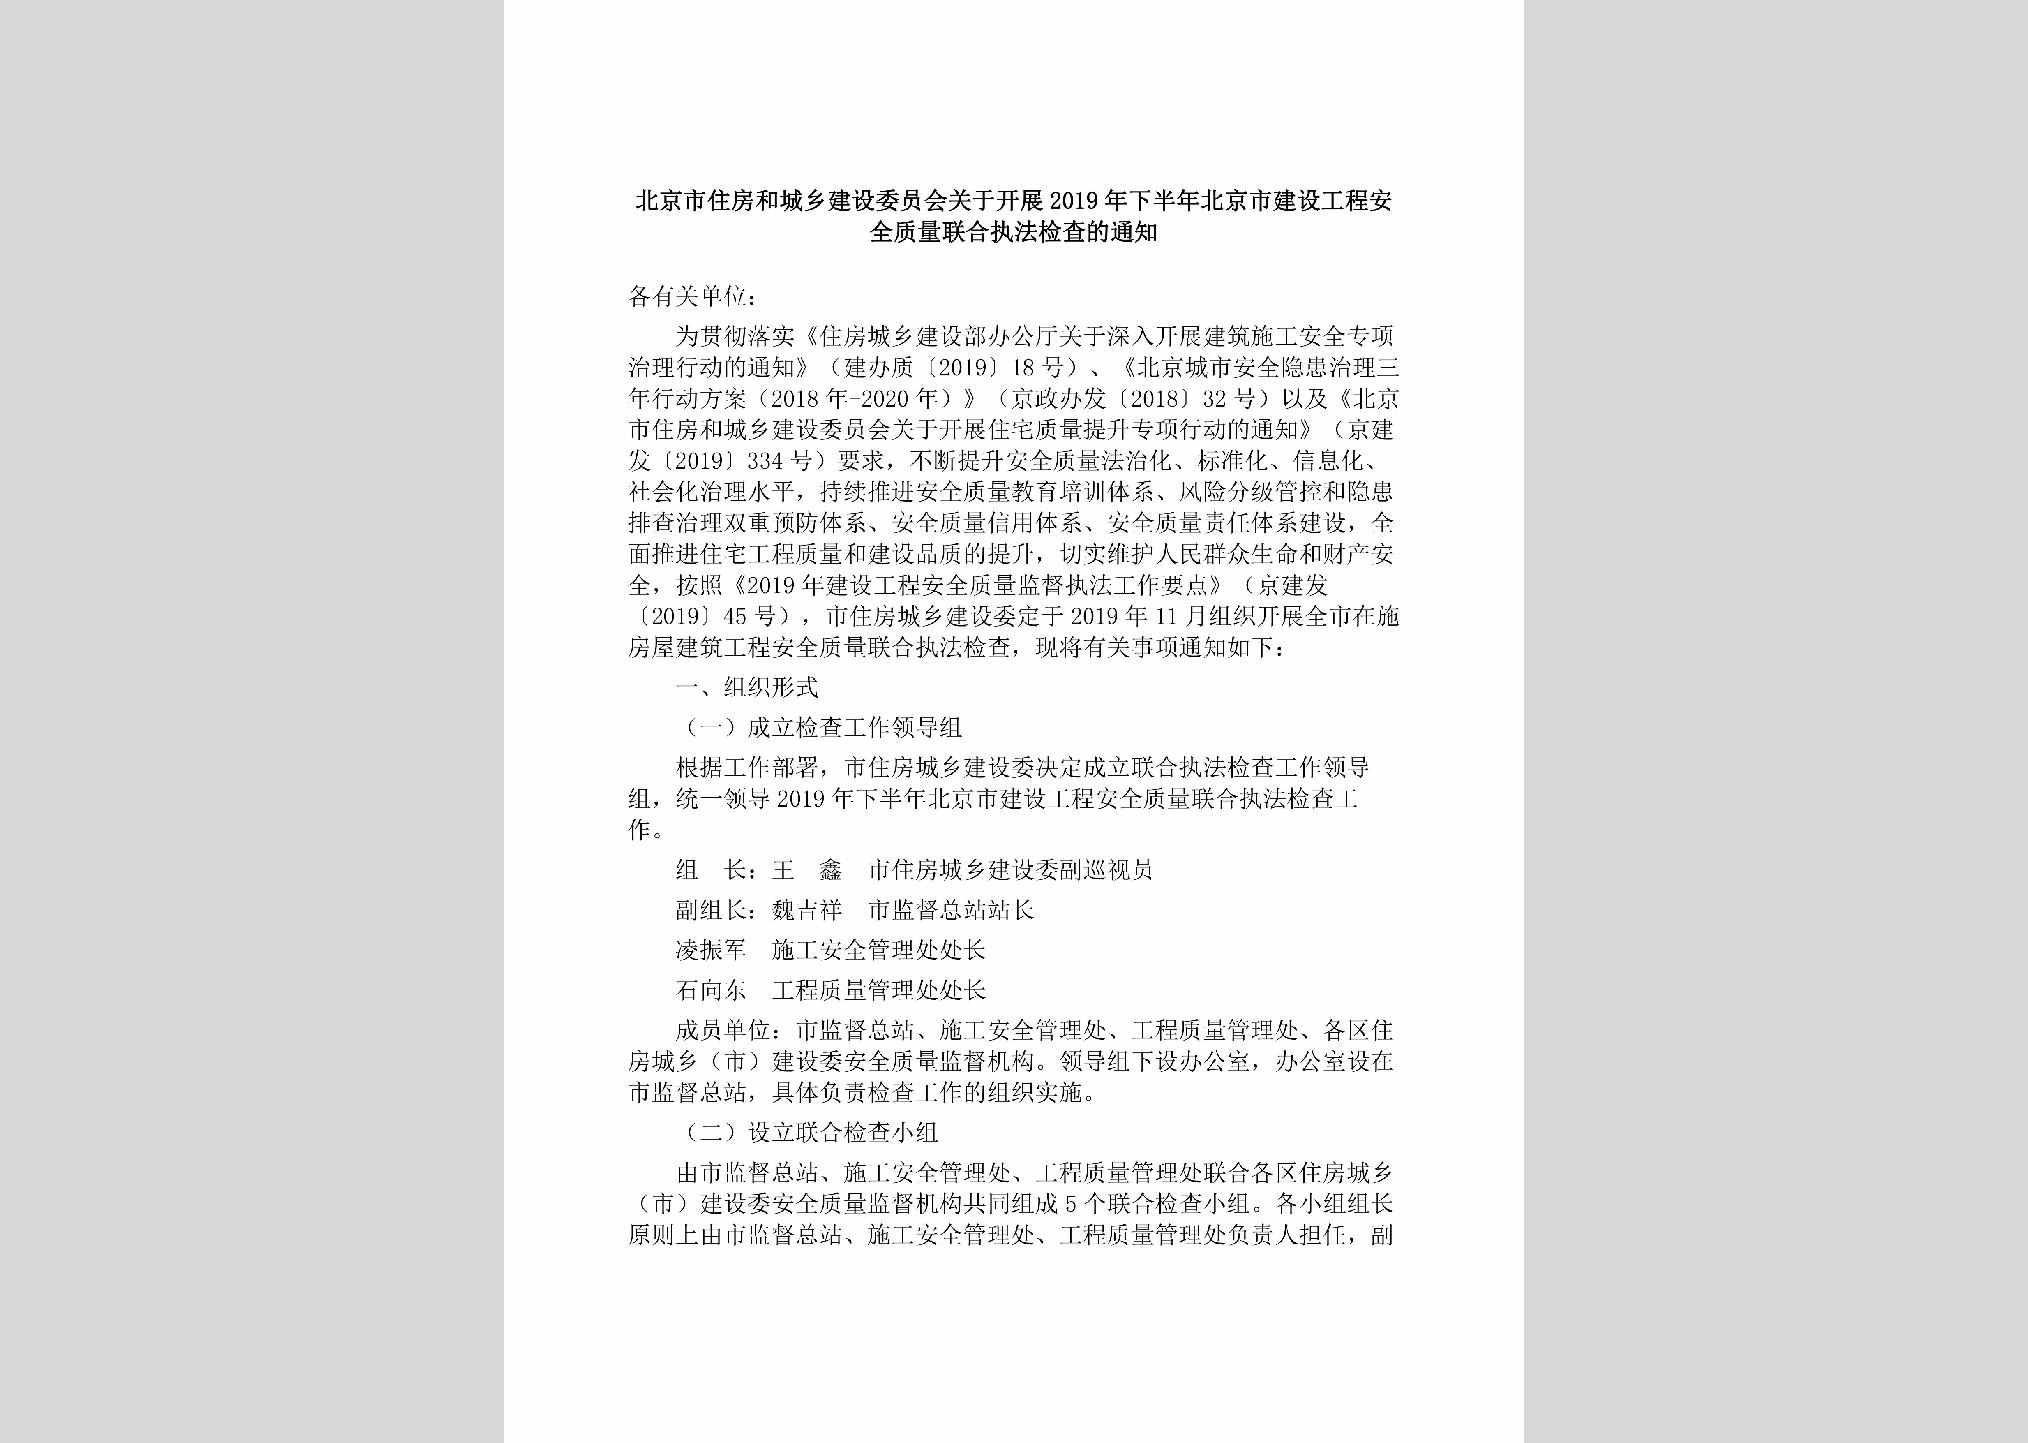 BJ-AQZLLHZF-2019：北京市住房和城乡建设委员会关于开展2019年下半年北京市建设工程安全质量联合执法检查的通知